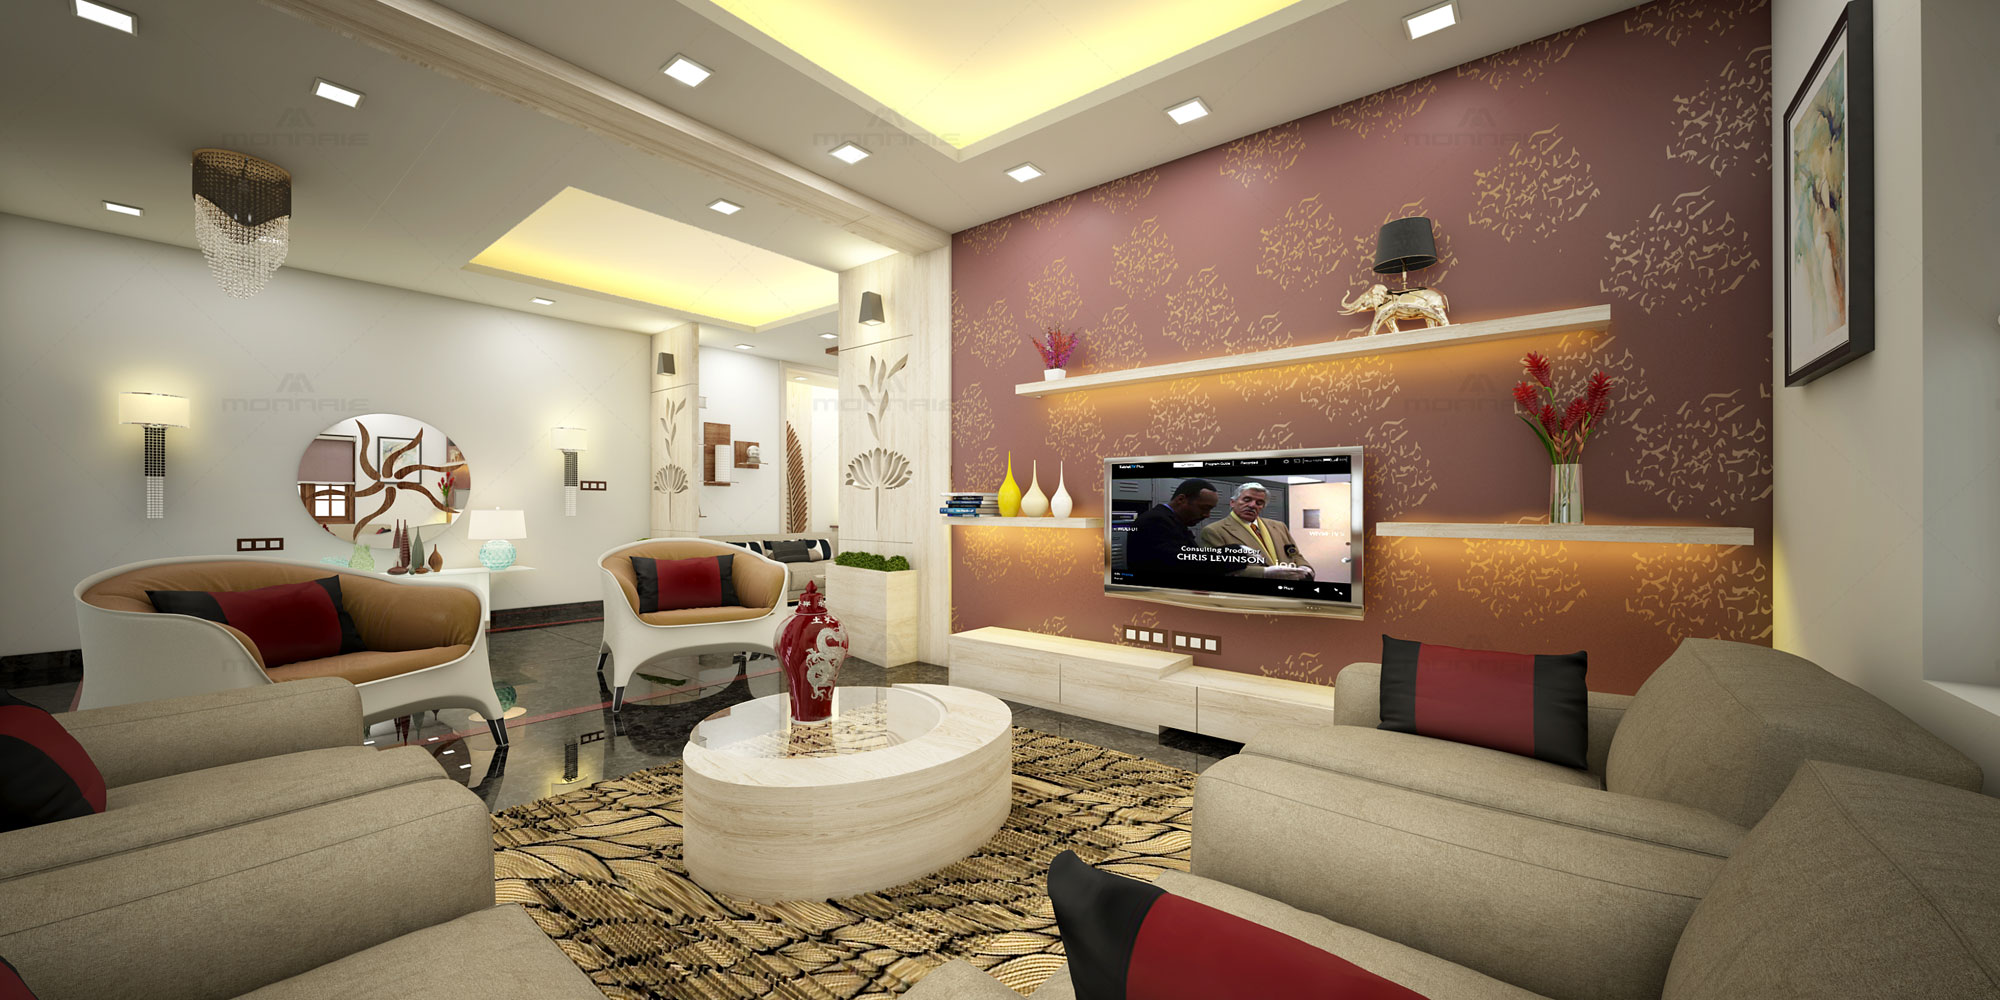 wallpaper for bedroom walls india,living room,room,interior design,furniture,property